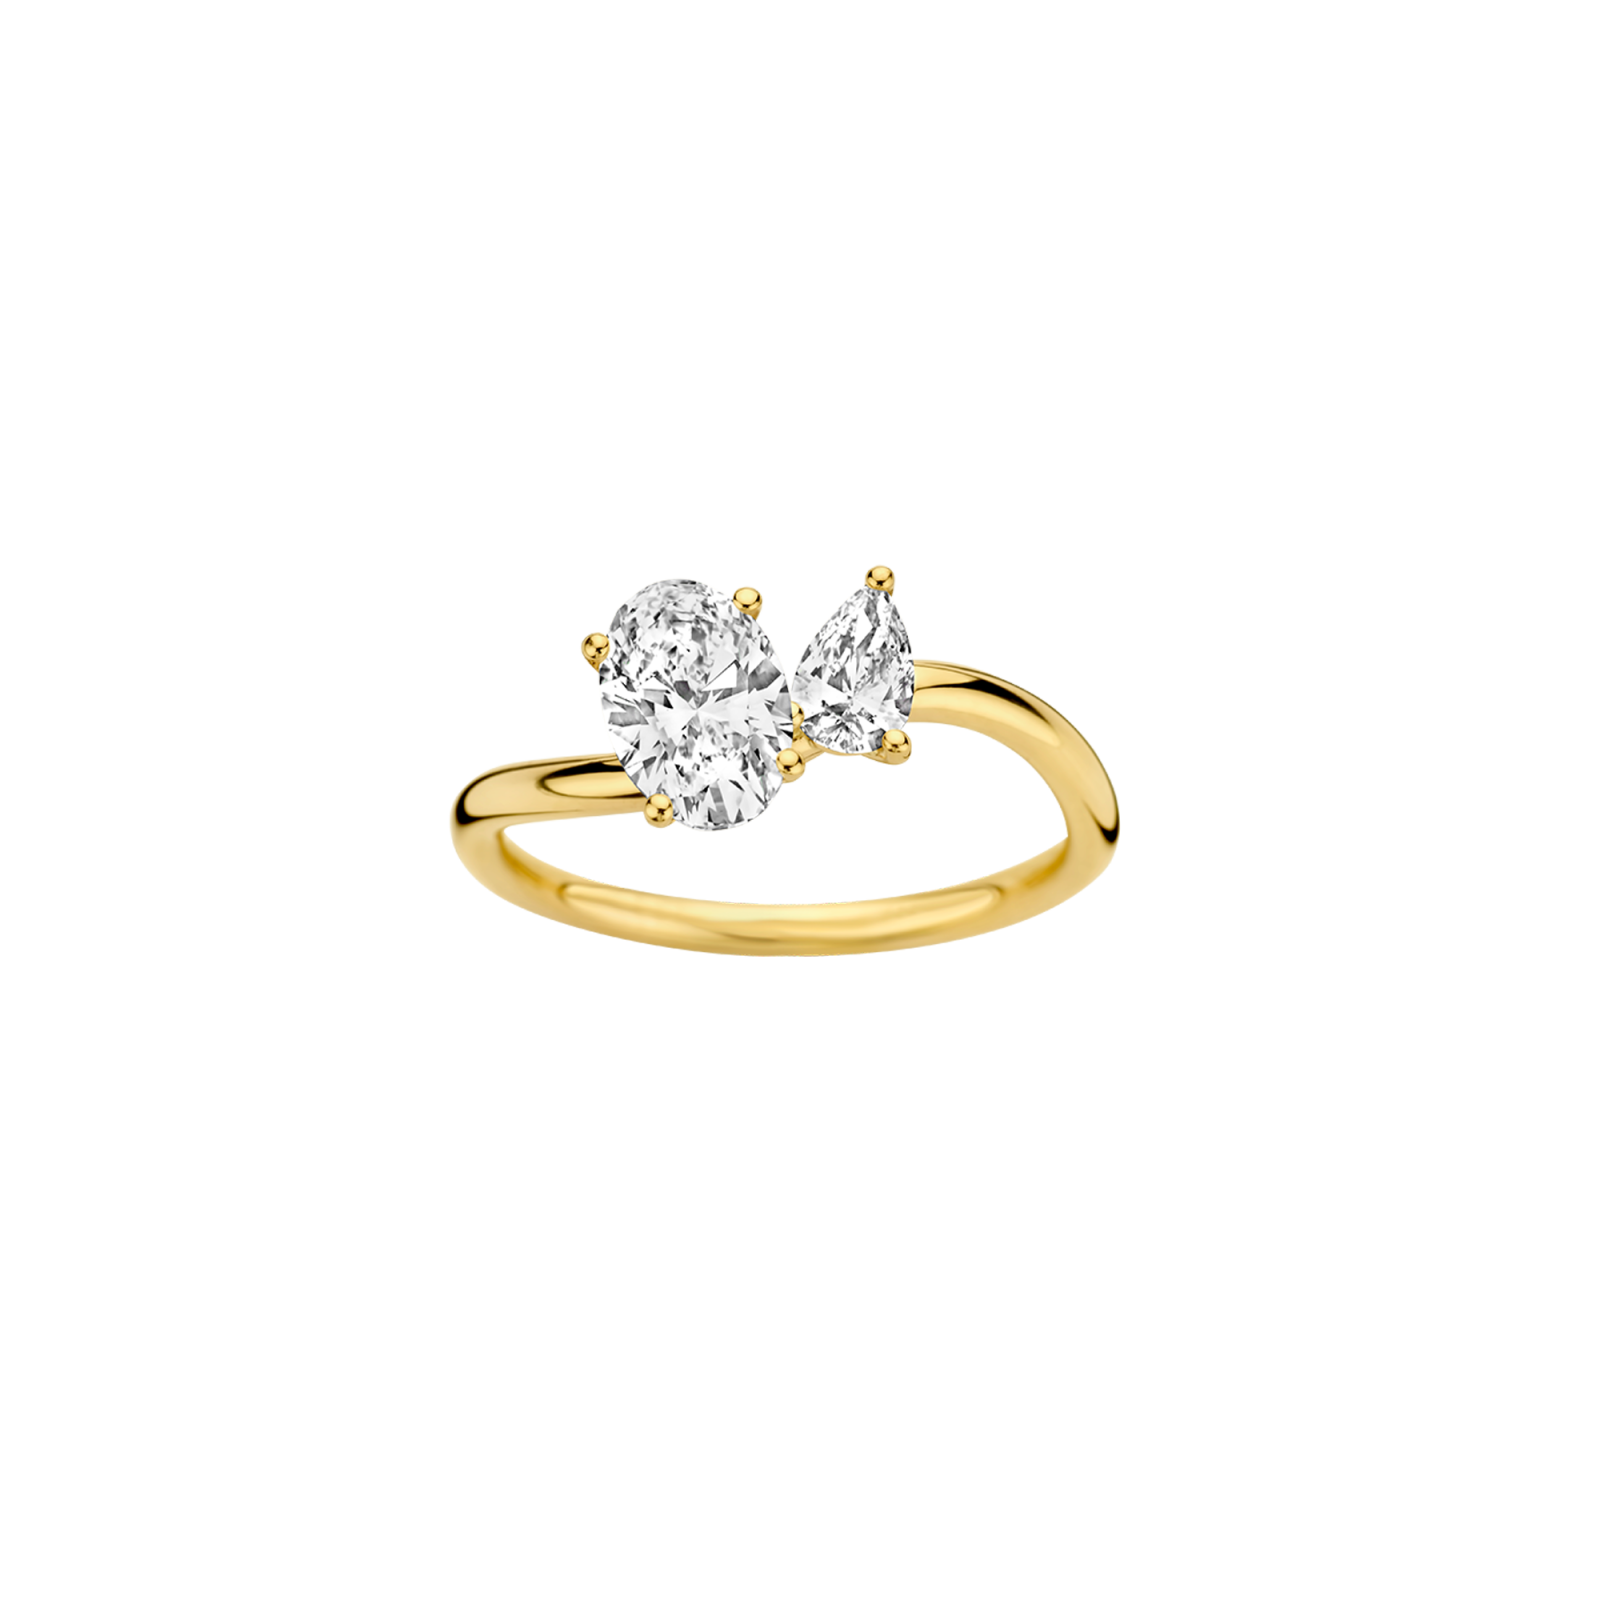 rosa engagement ring packshot - yellow gold